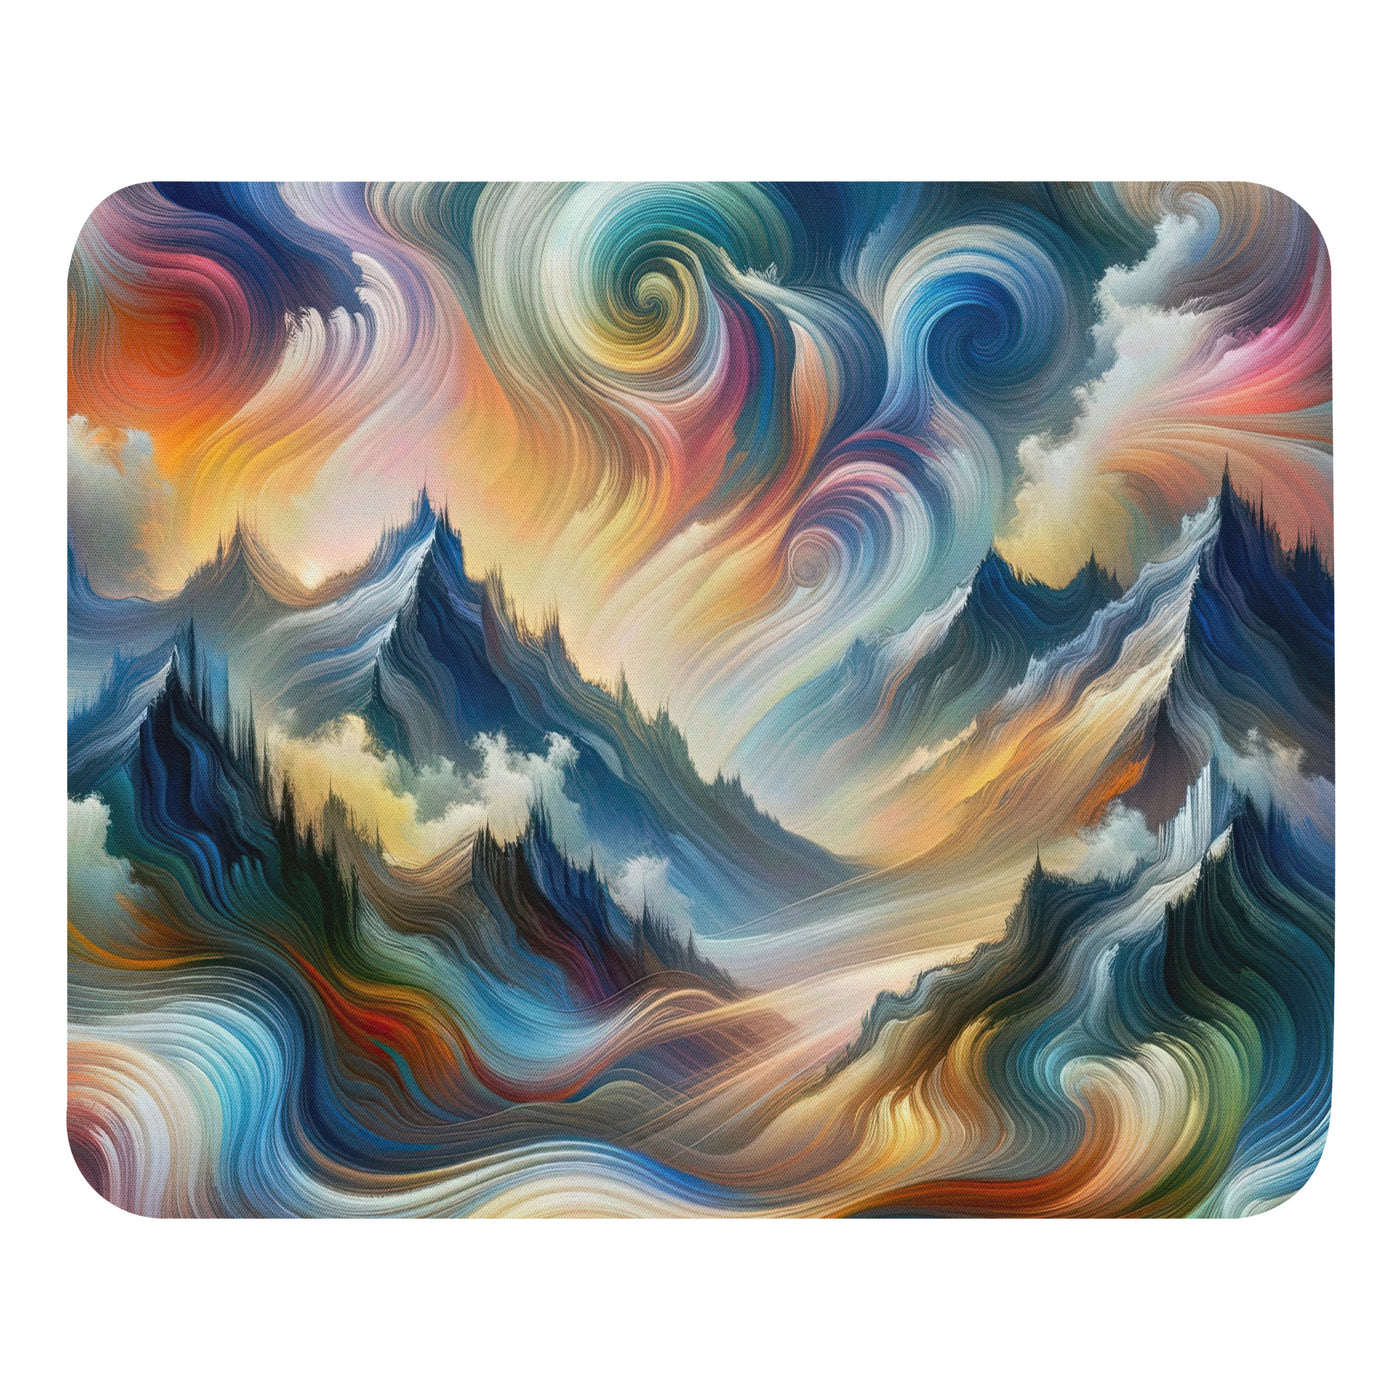 Ätherische schöne Alpen in lebendigen Farbwirbeln - Abstrakte Berge - Mauspad berge xxx yyy zzz Default Title